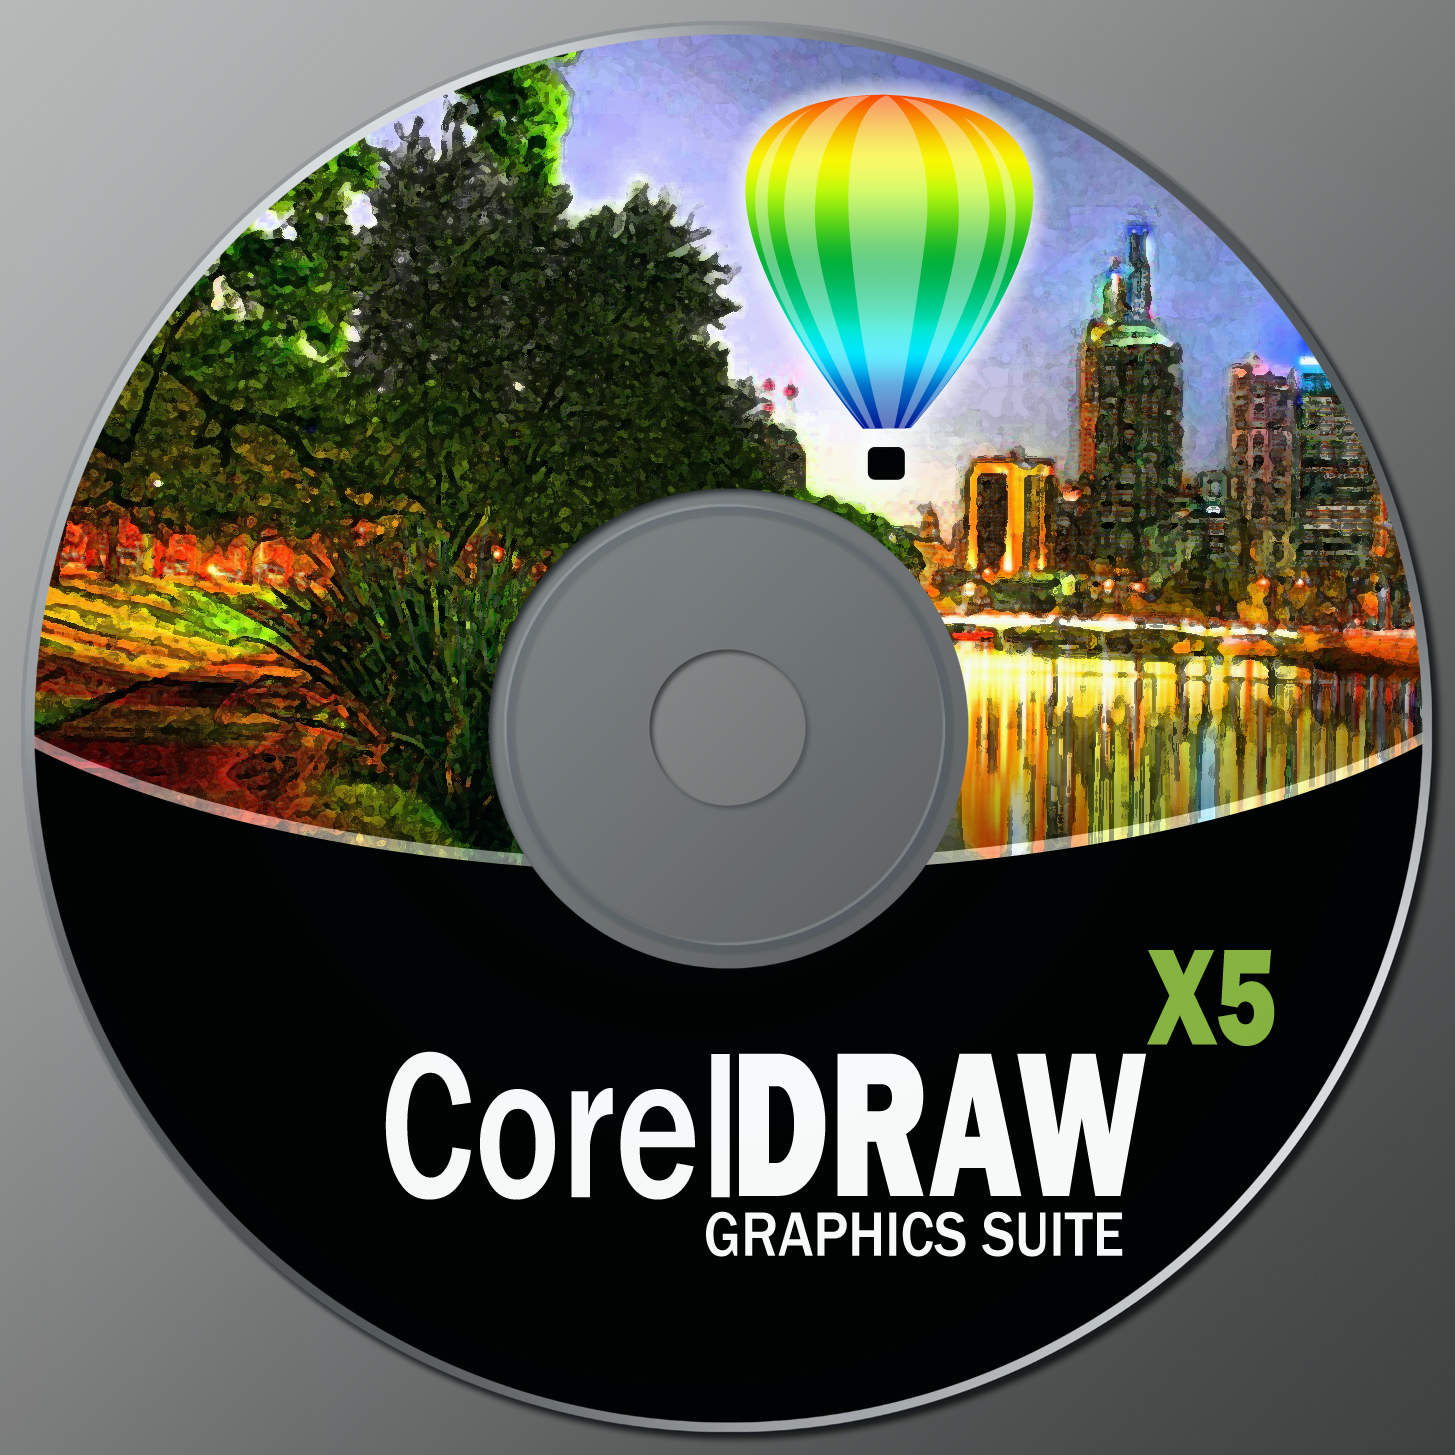 coreldraw graphics suite x5 free trial download